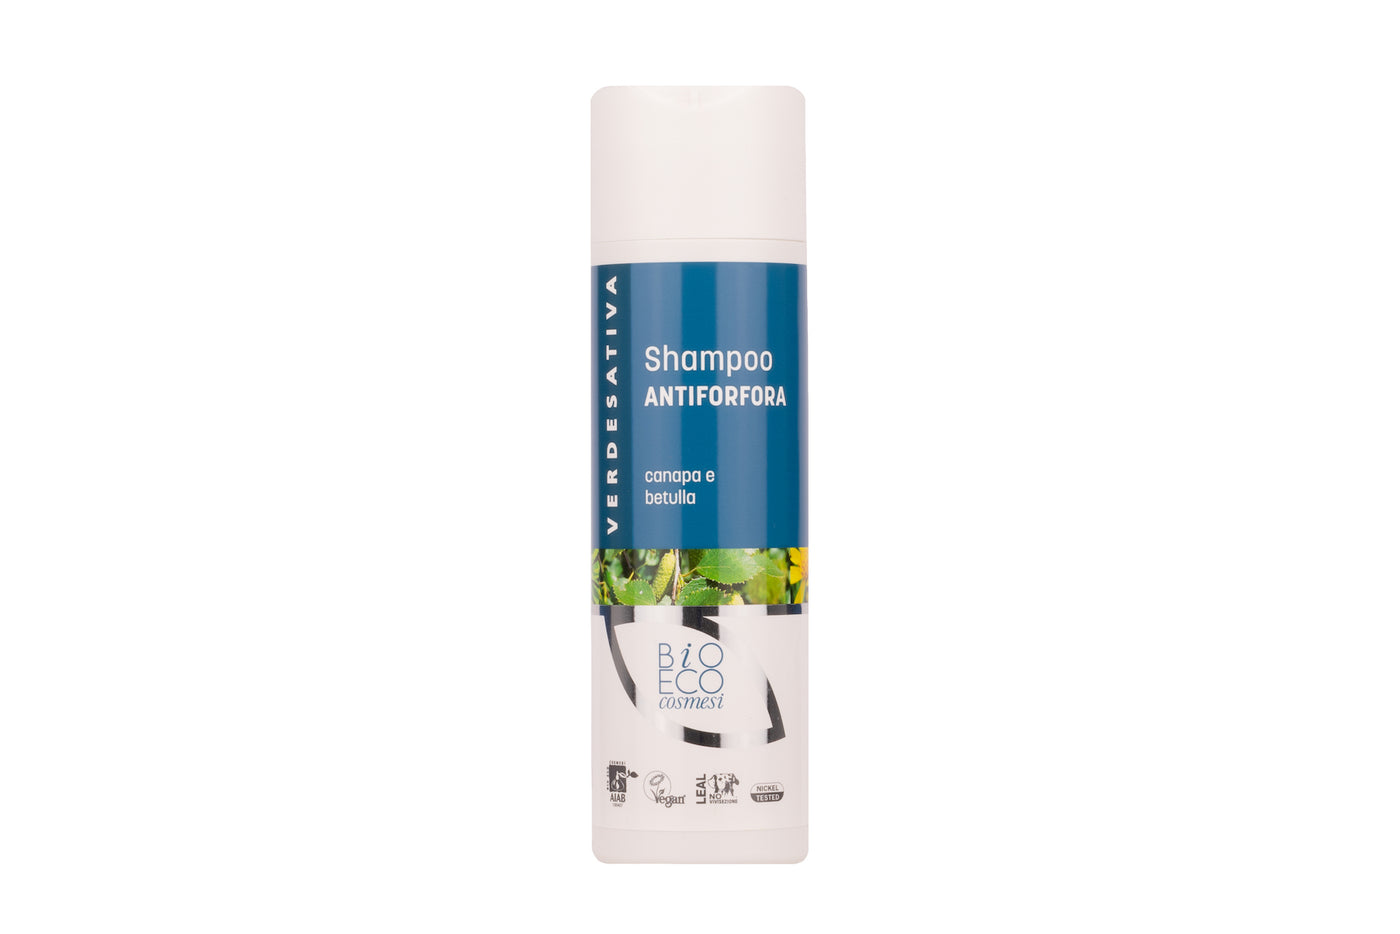 Shampoo Antiforfora – 100% naturale e bio degradabile - Bongae 